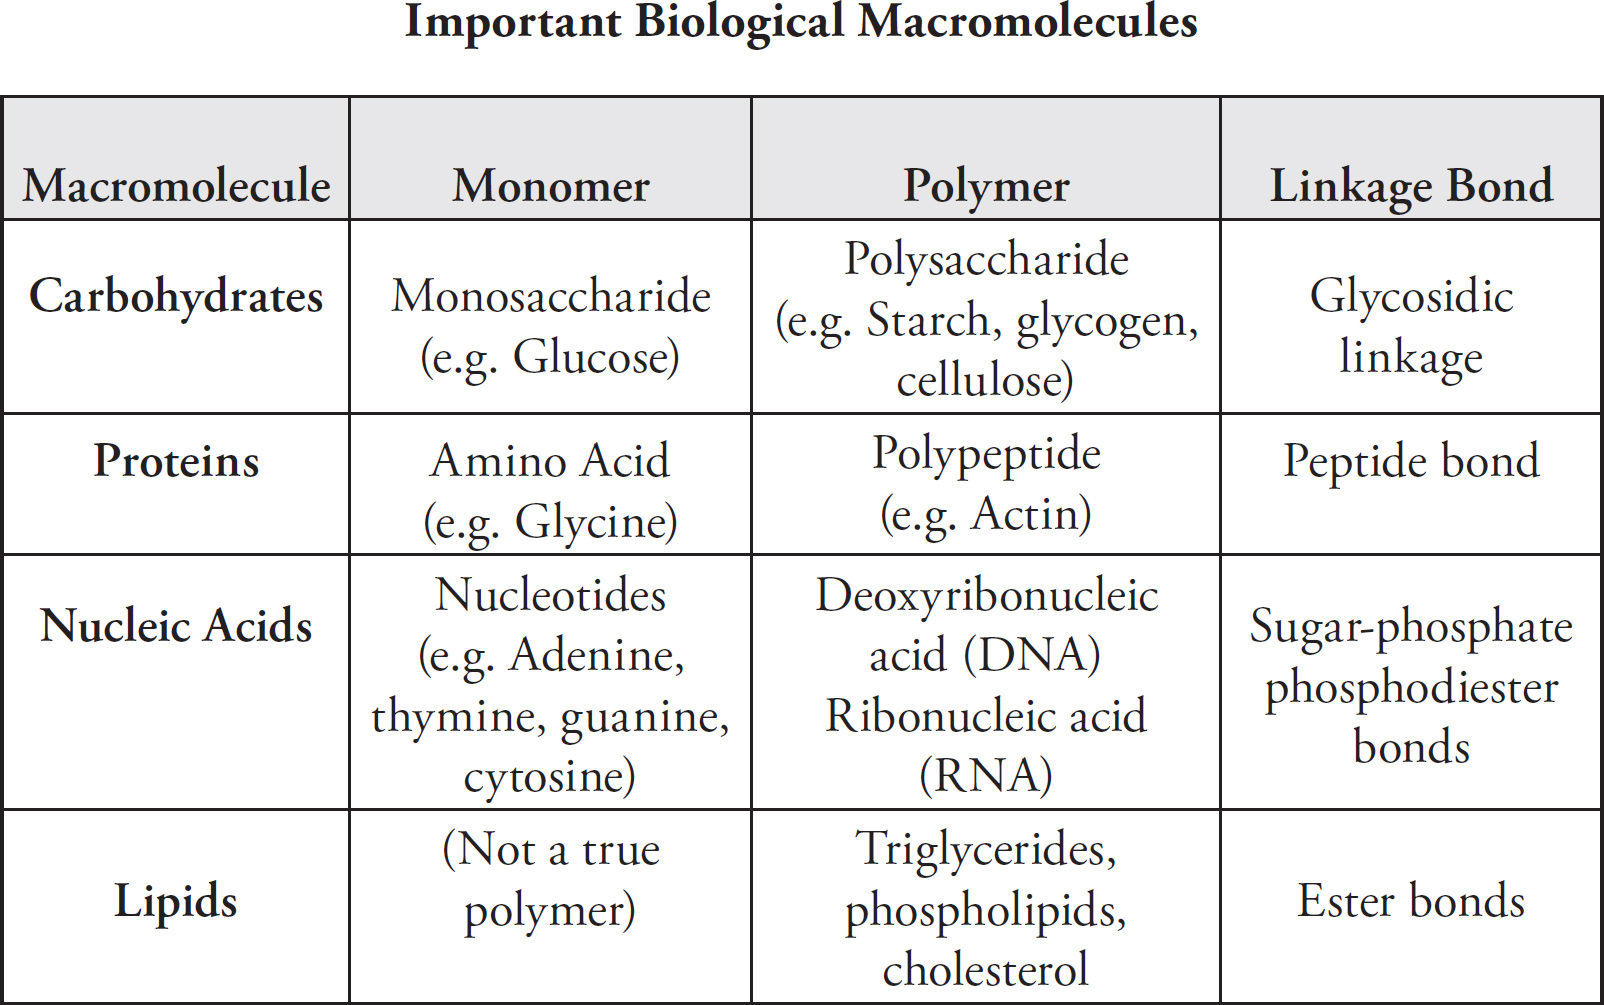 macromolecules chart ap biology